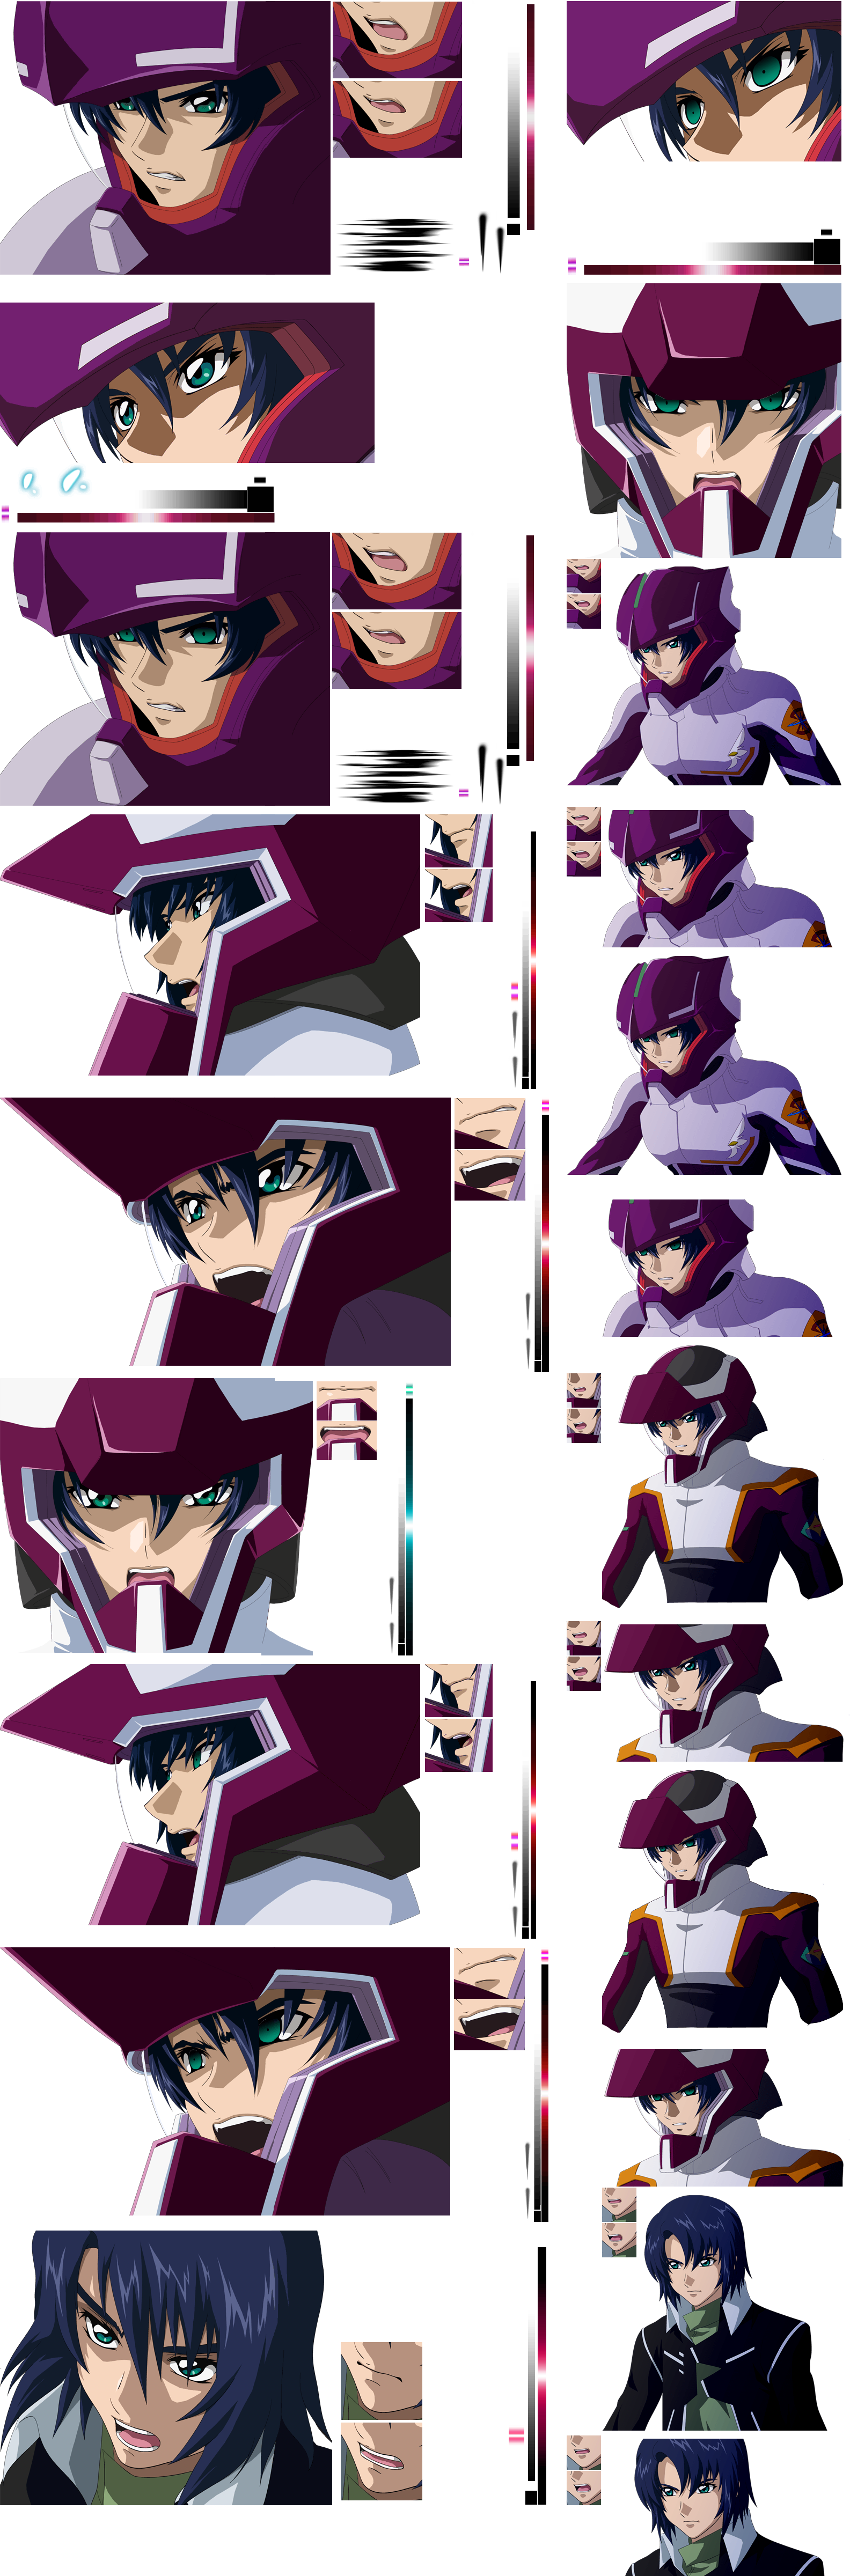 SD Gundam G Generation Wars - Athrun Zala (C.E. 73)